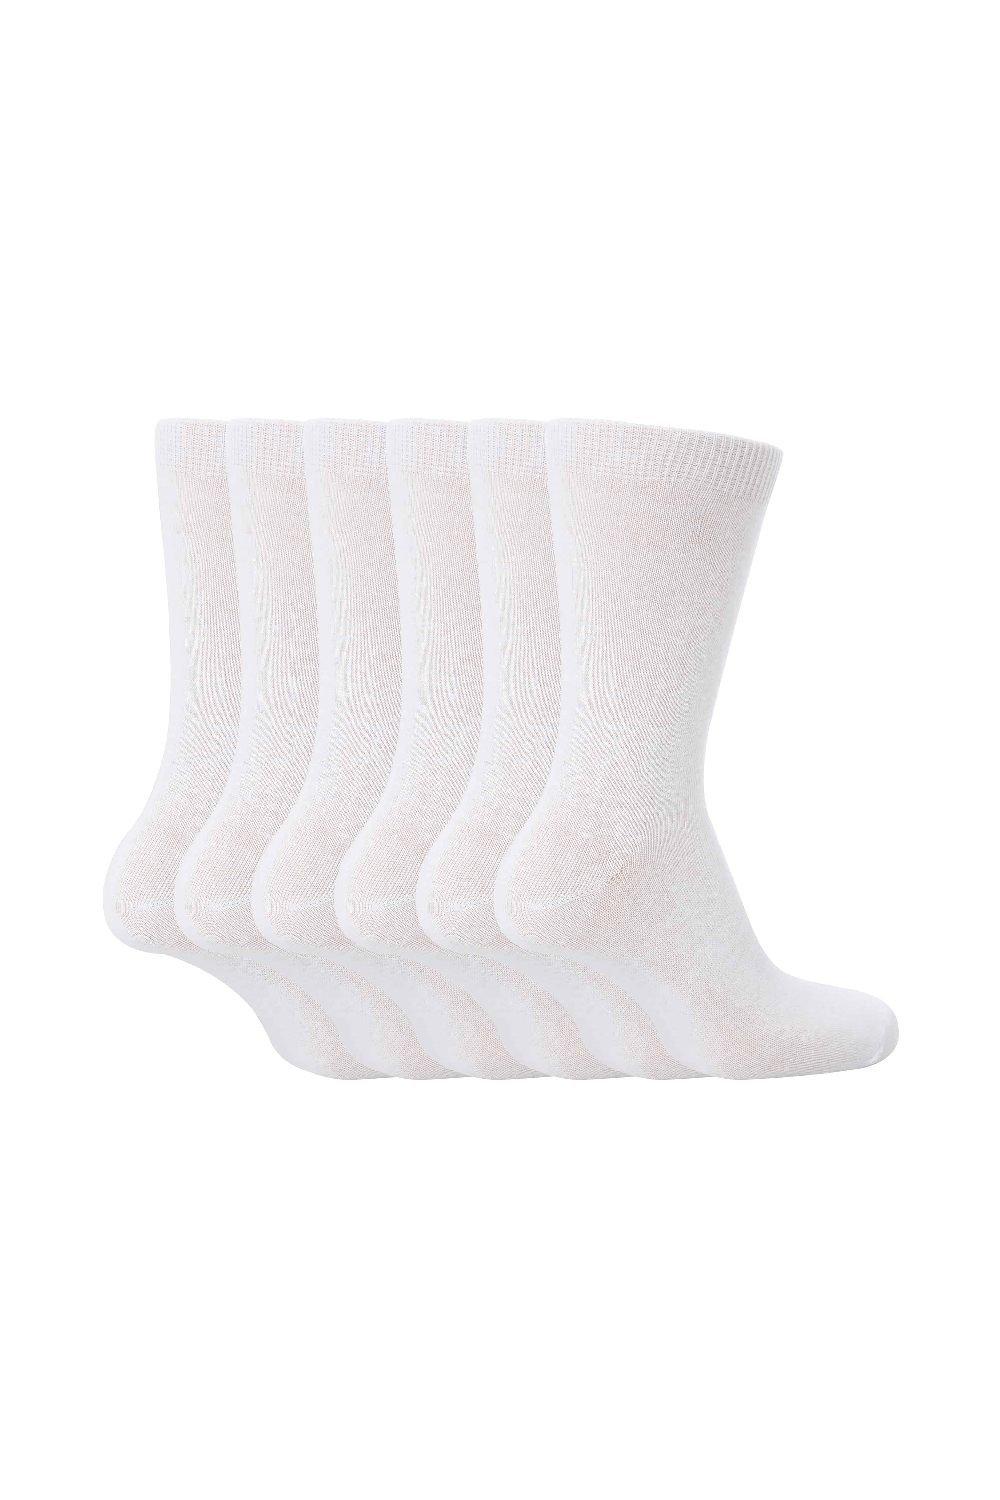 6 Pairs Plain School Soft Cotton Socks